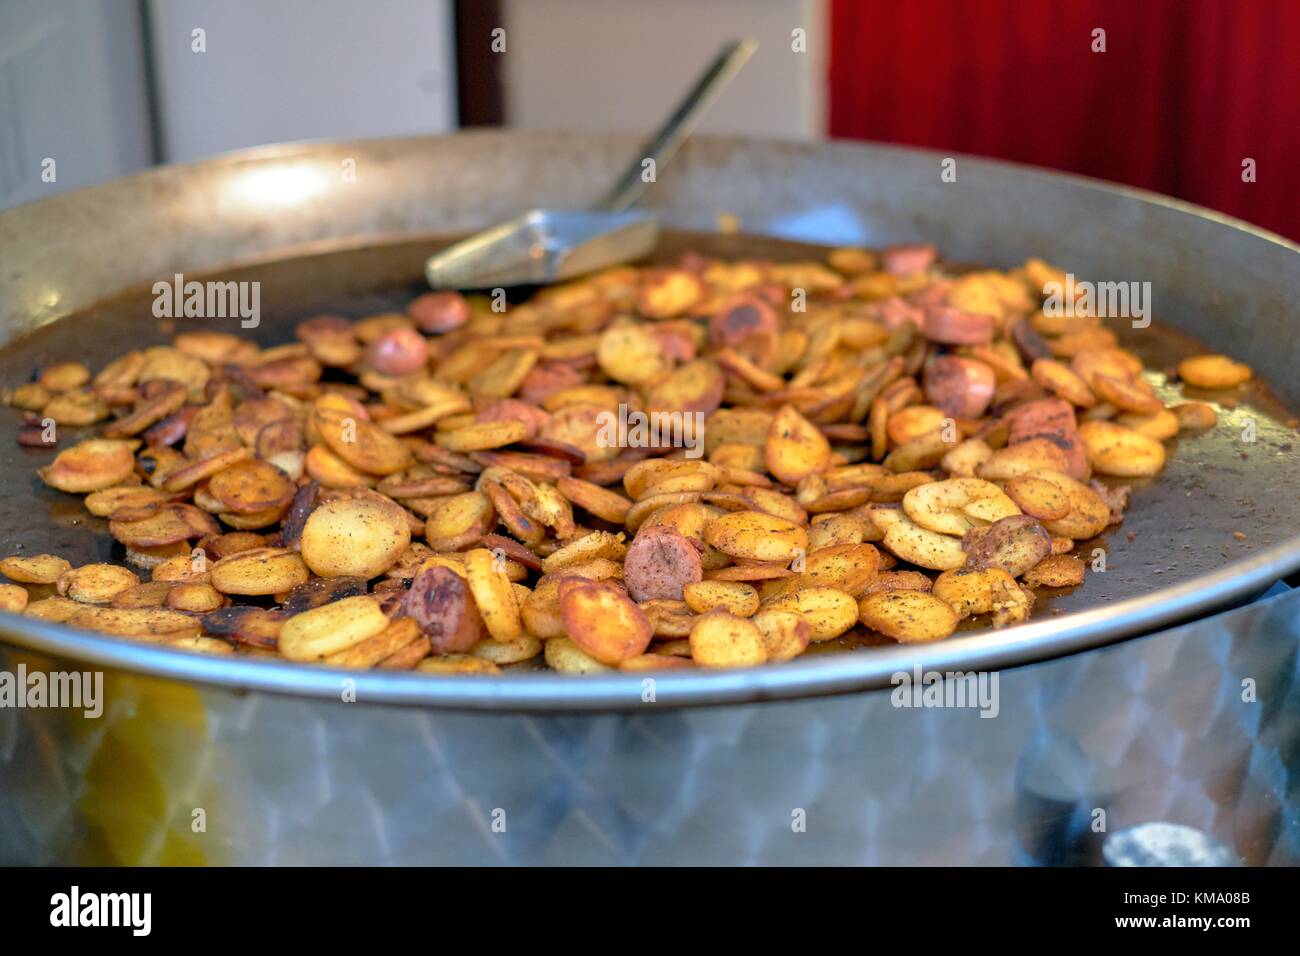 Potato slices in a large pan, Nottingham Christmas market 2017 Stock Photo